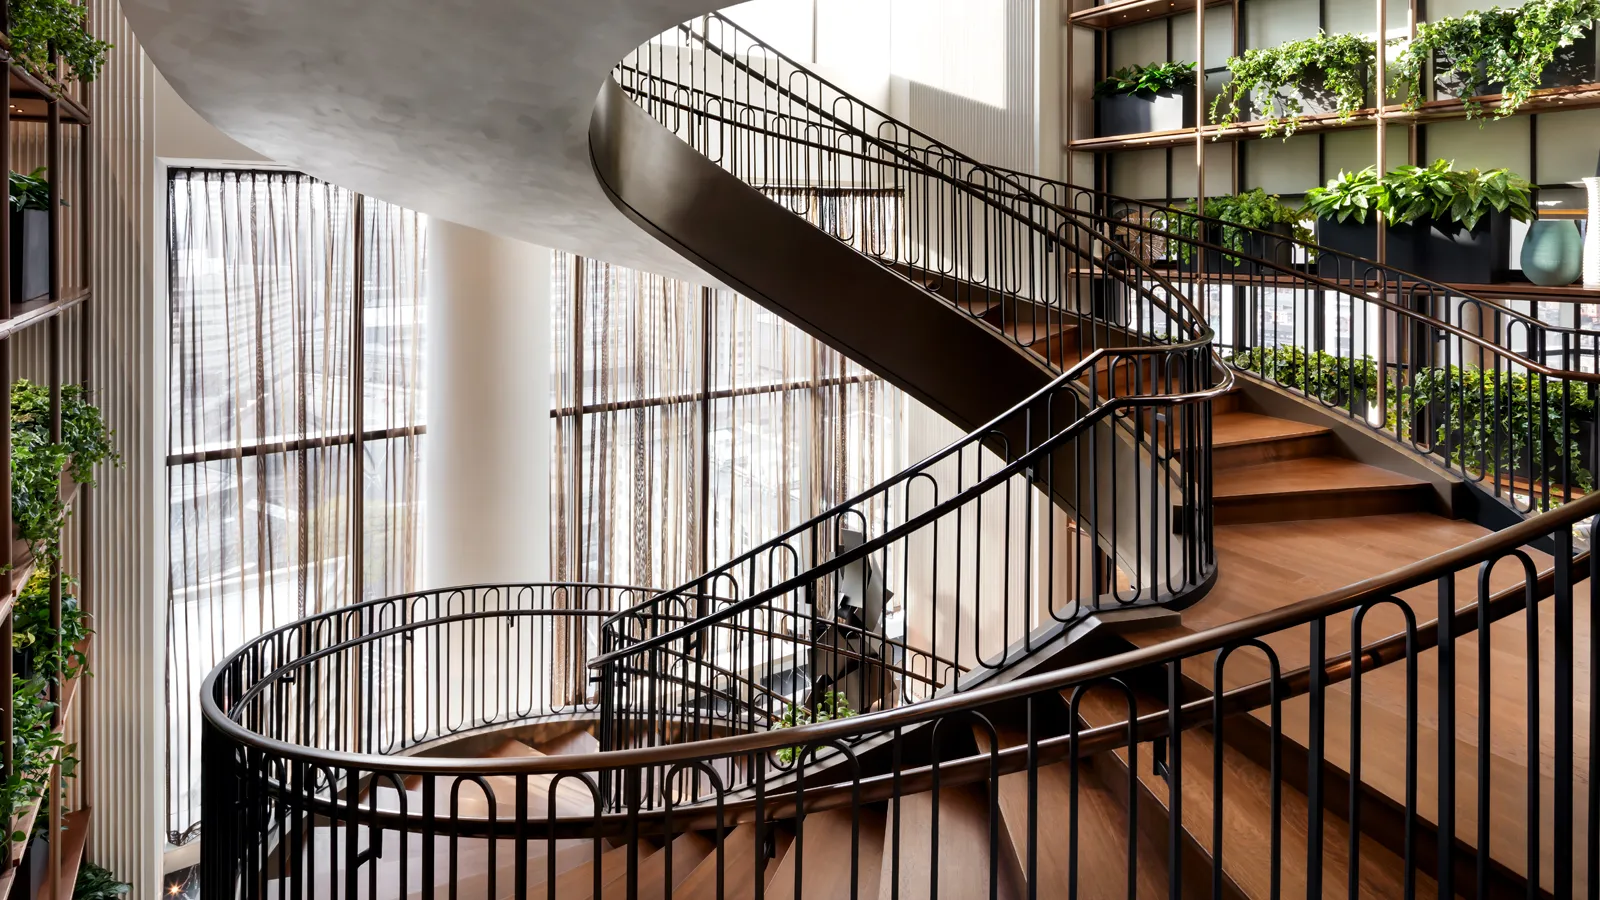 Raffles spiral staircase